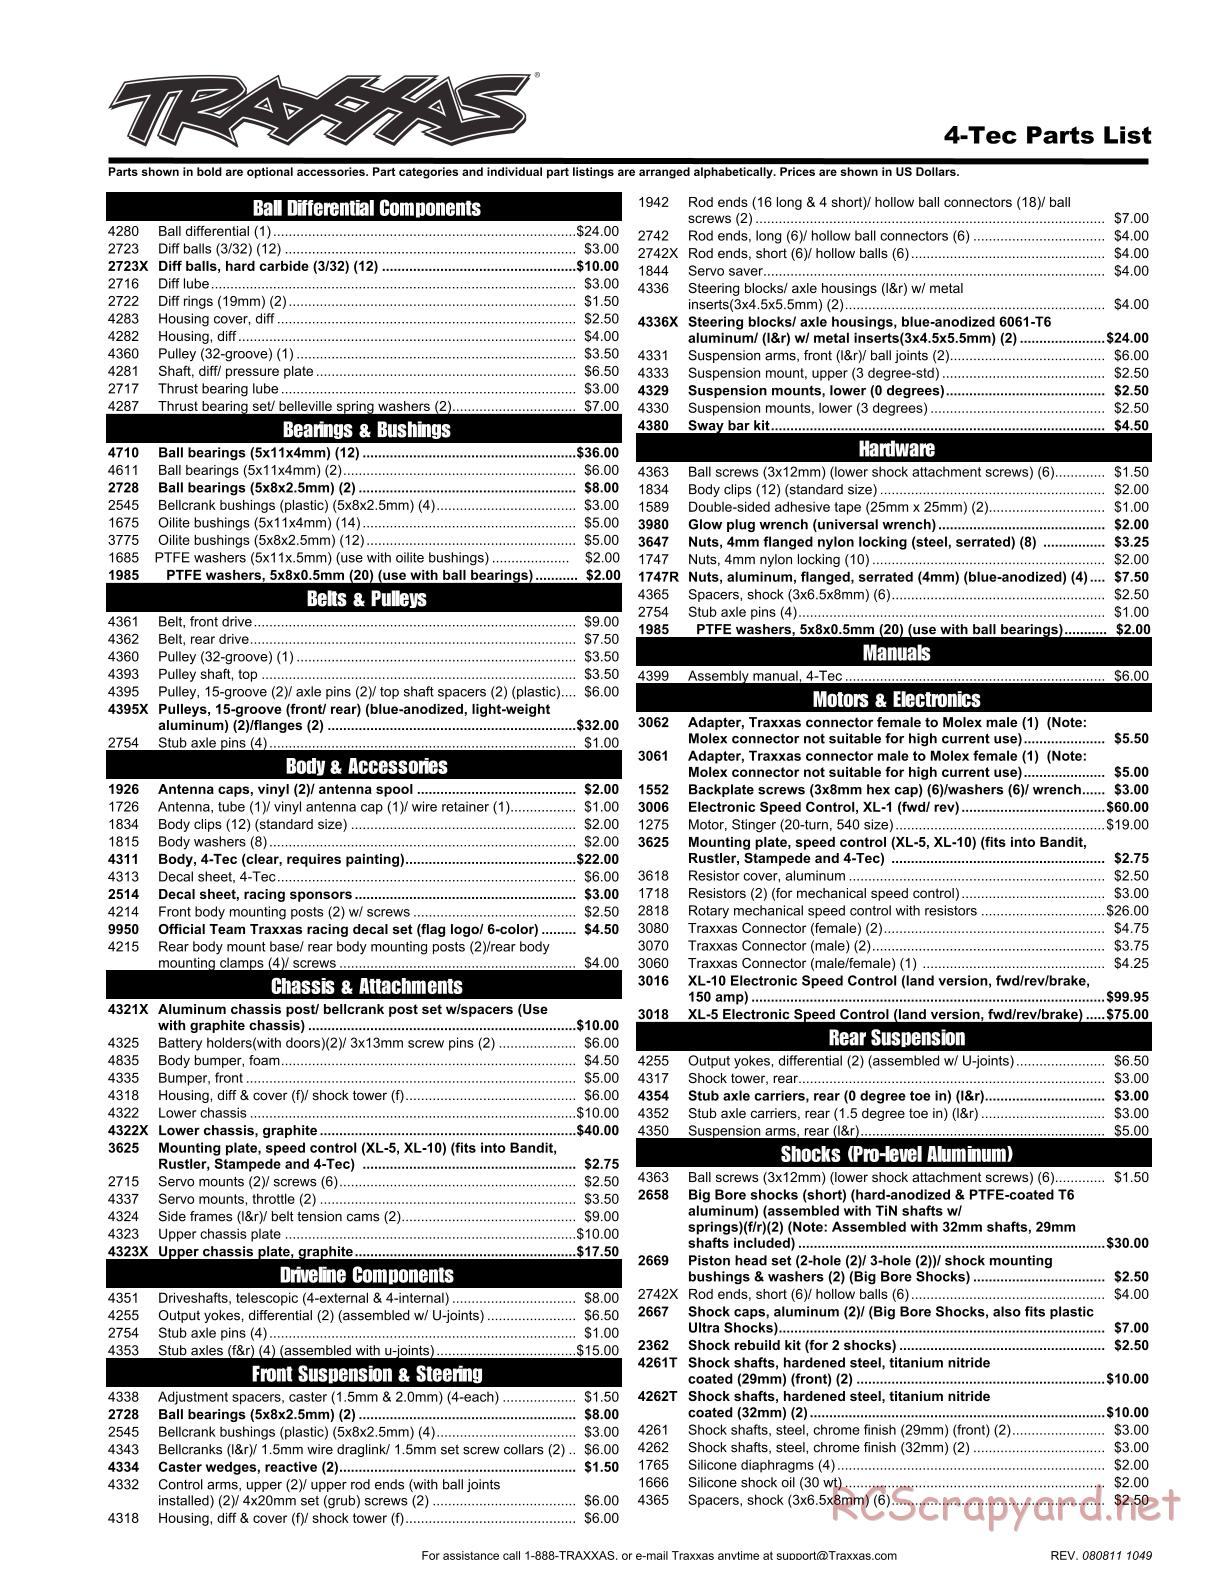 Traxxas - 4-Tec XL-1 - Parts List - Page 1